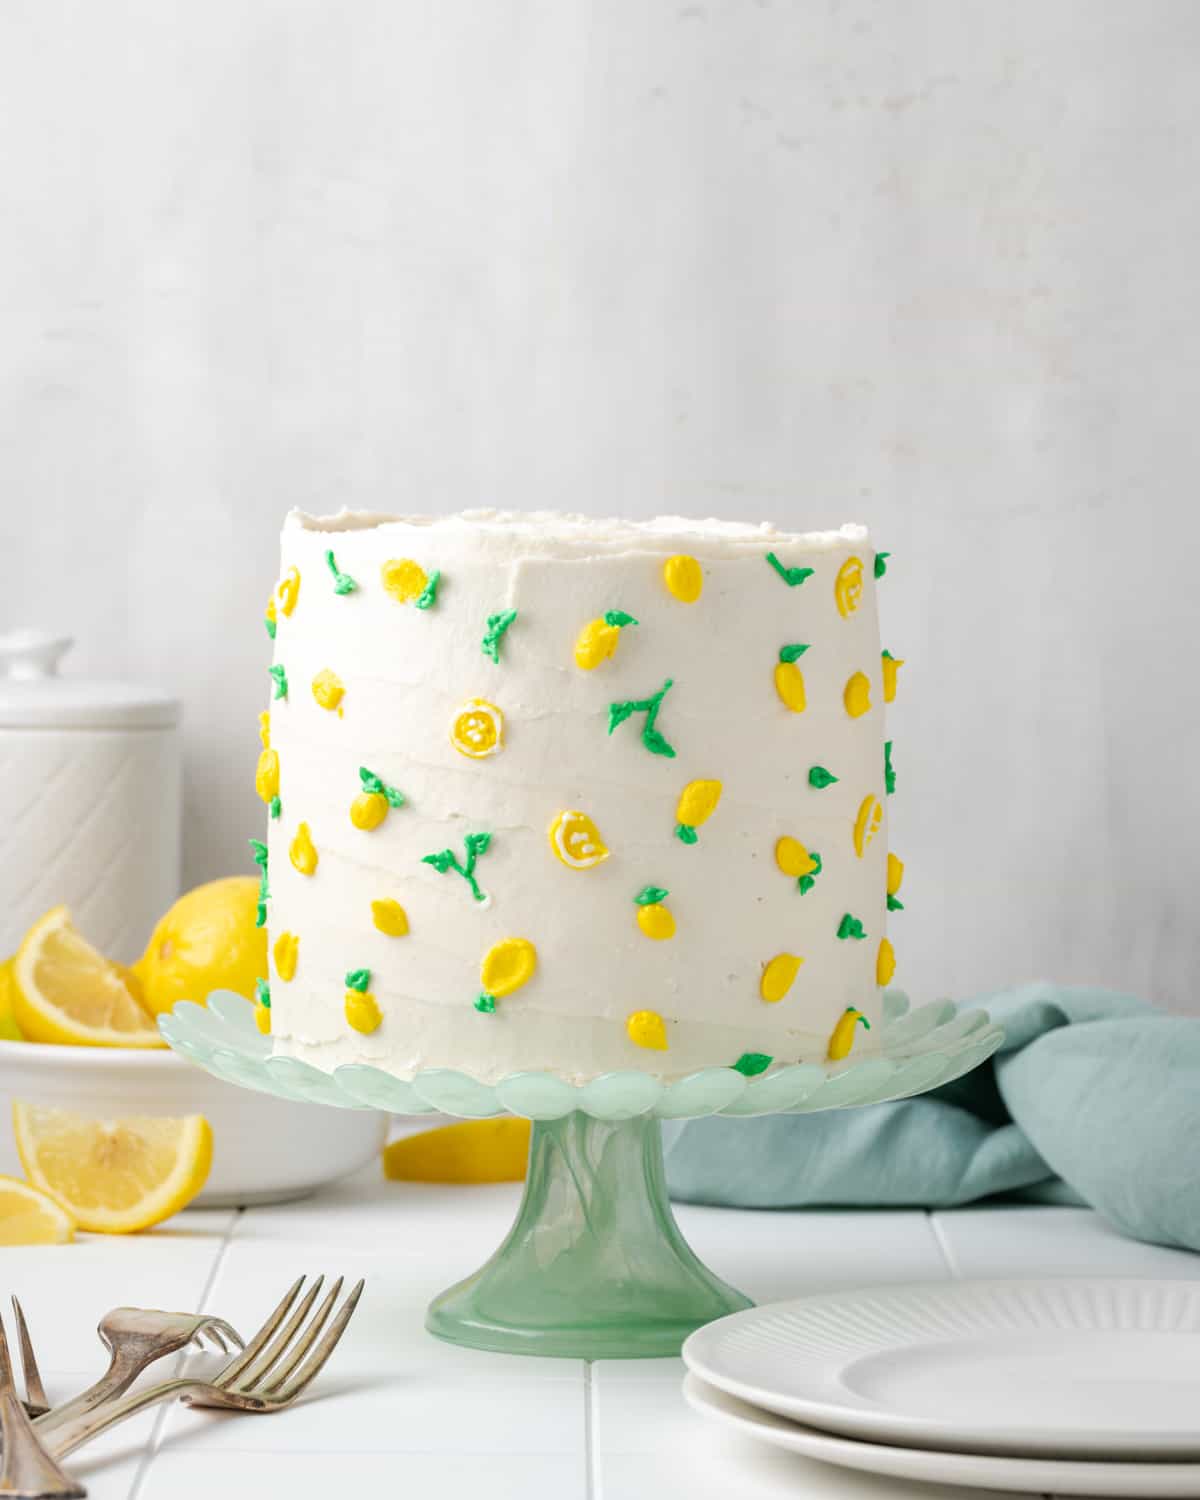 A gluten free lemon cake sitting on a green glass cake stand.